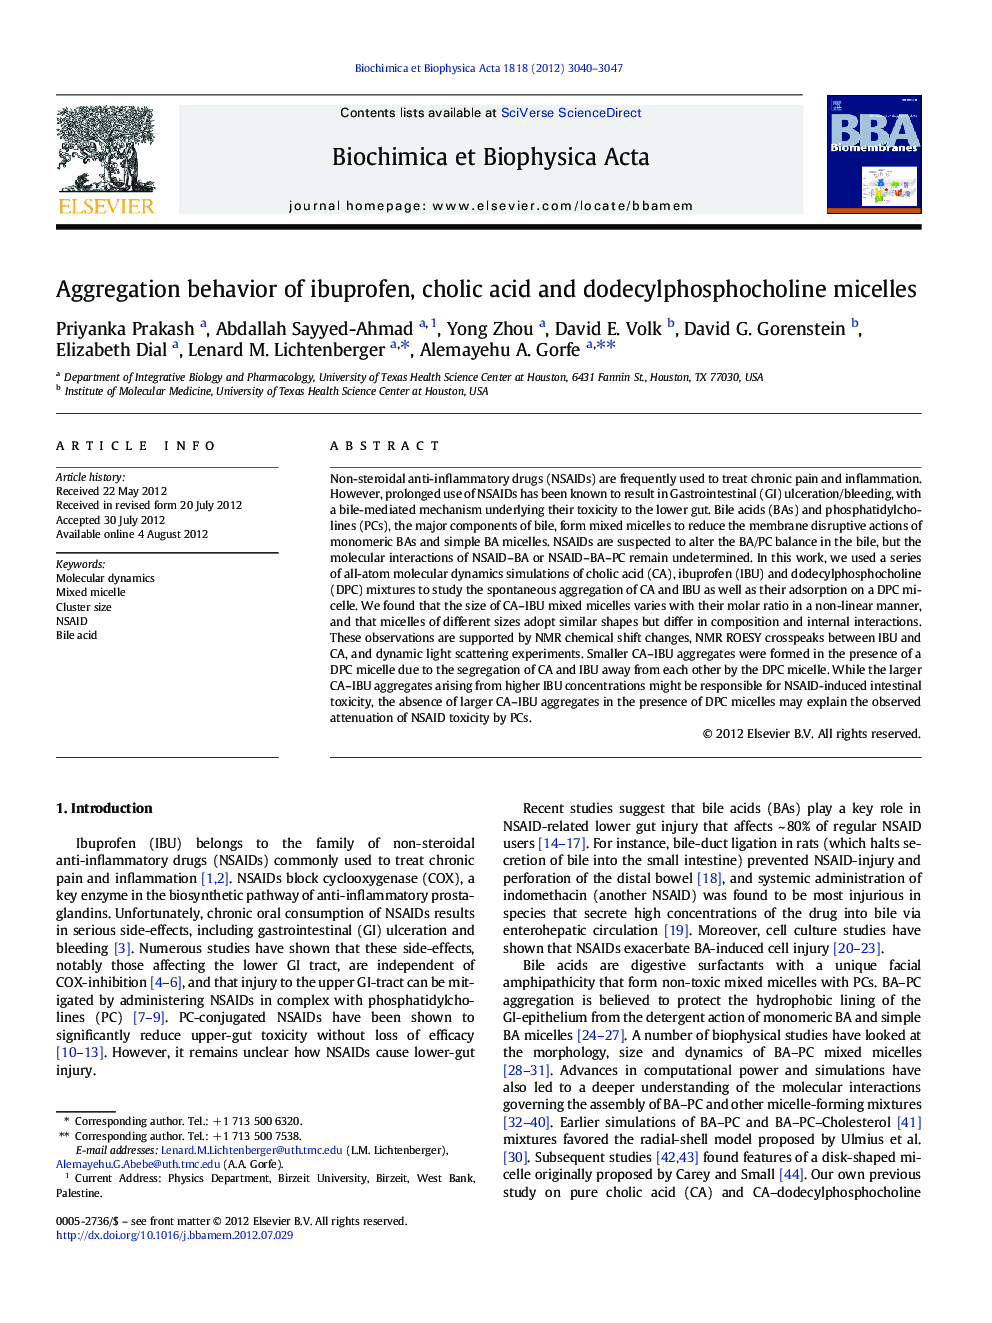 Aggregation behavior of ibuprofen, cholic acid and dodecylphosphocholine micelles